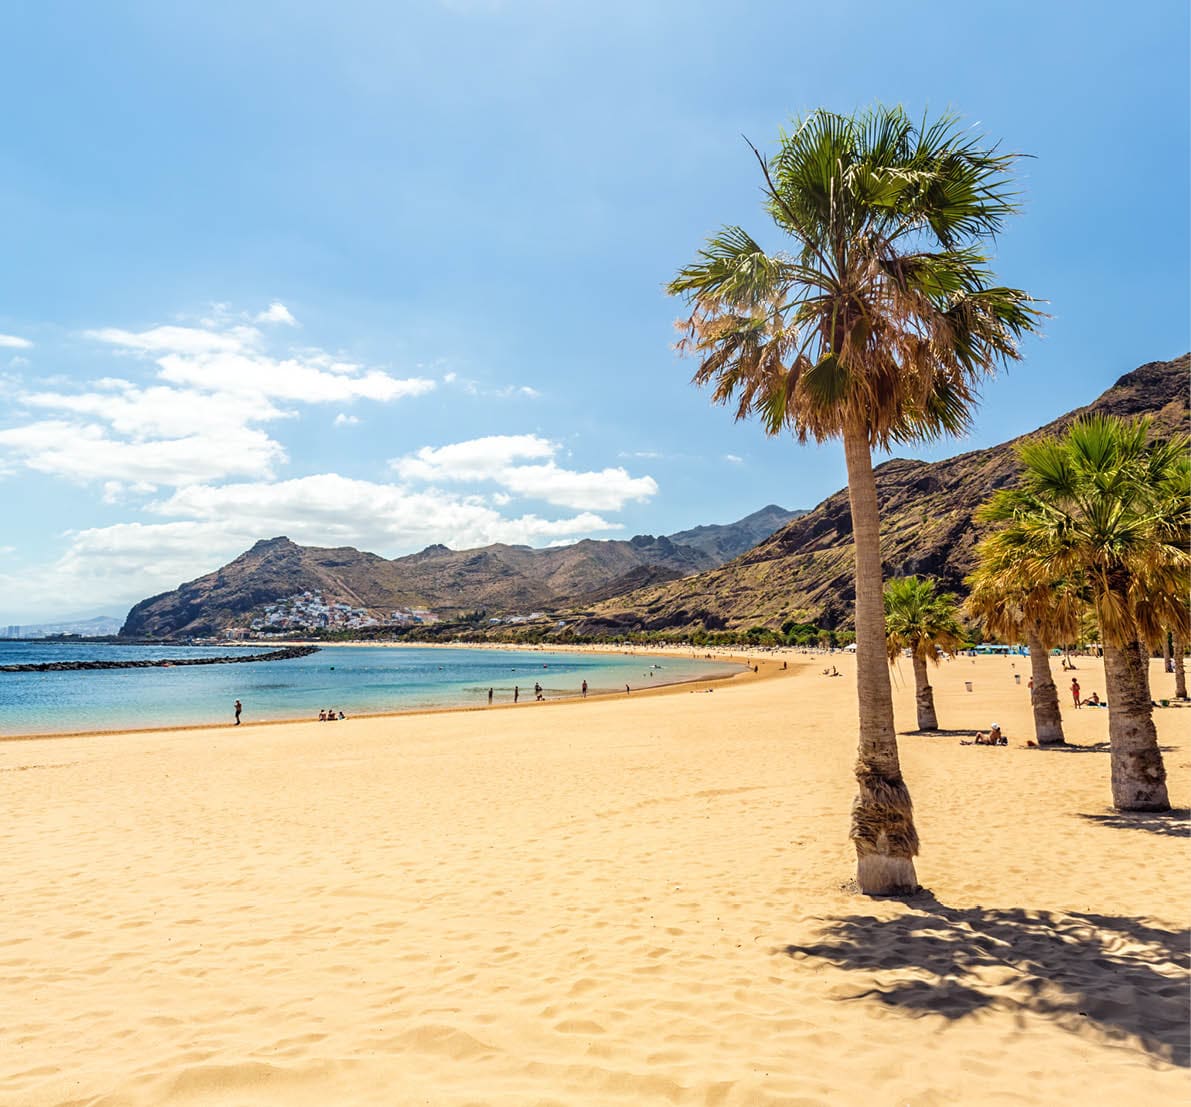 Playa de Las Teresitas in Tenerife / Canary Islands and Santa Cruz in the background.